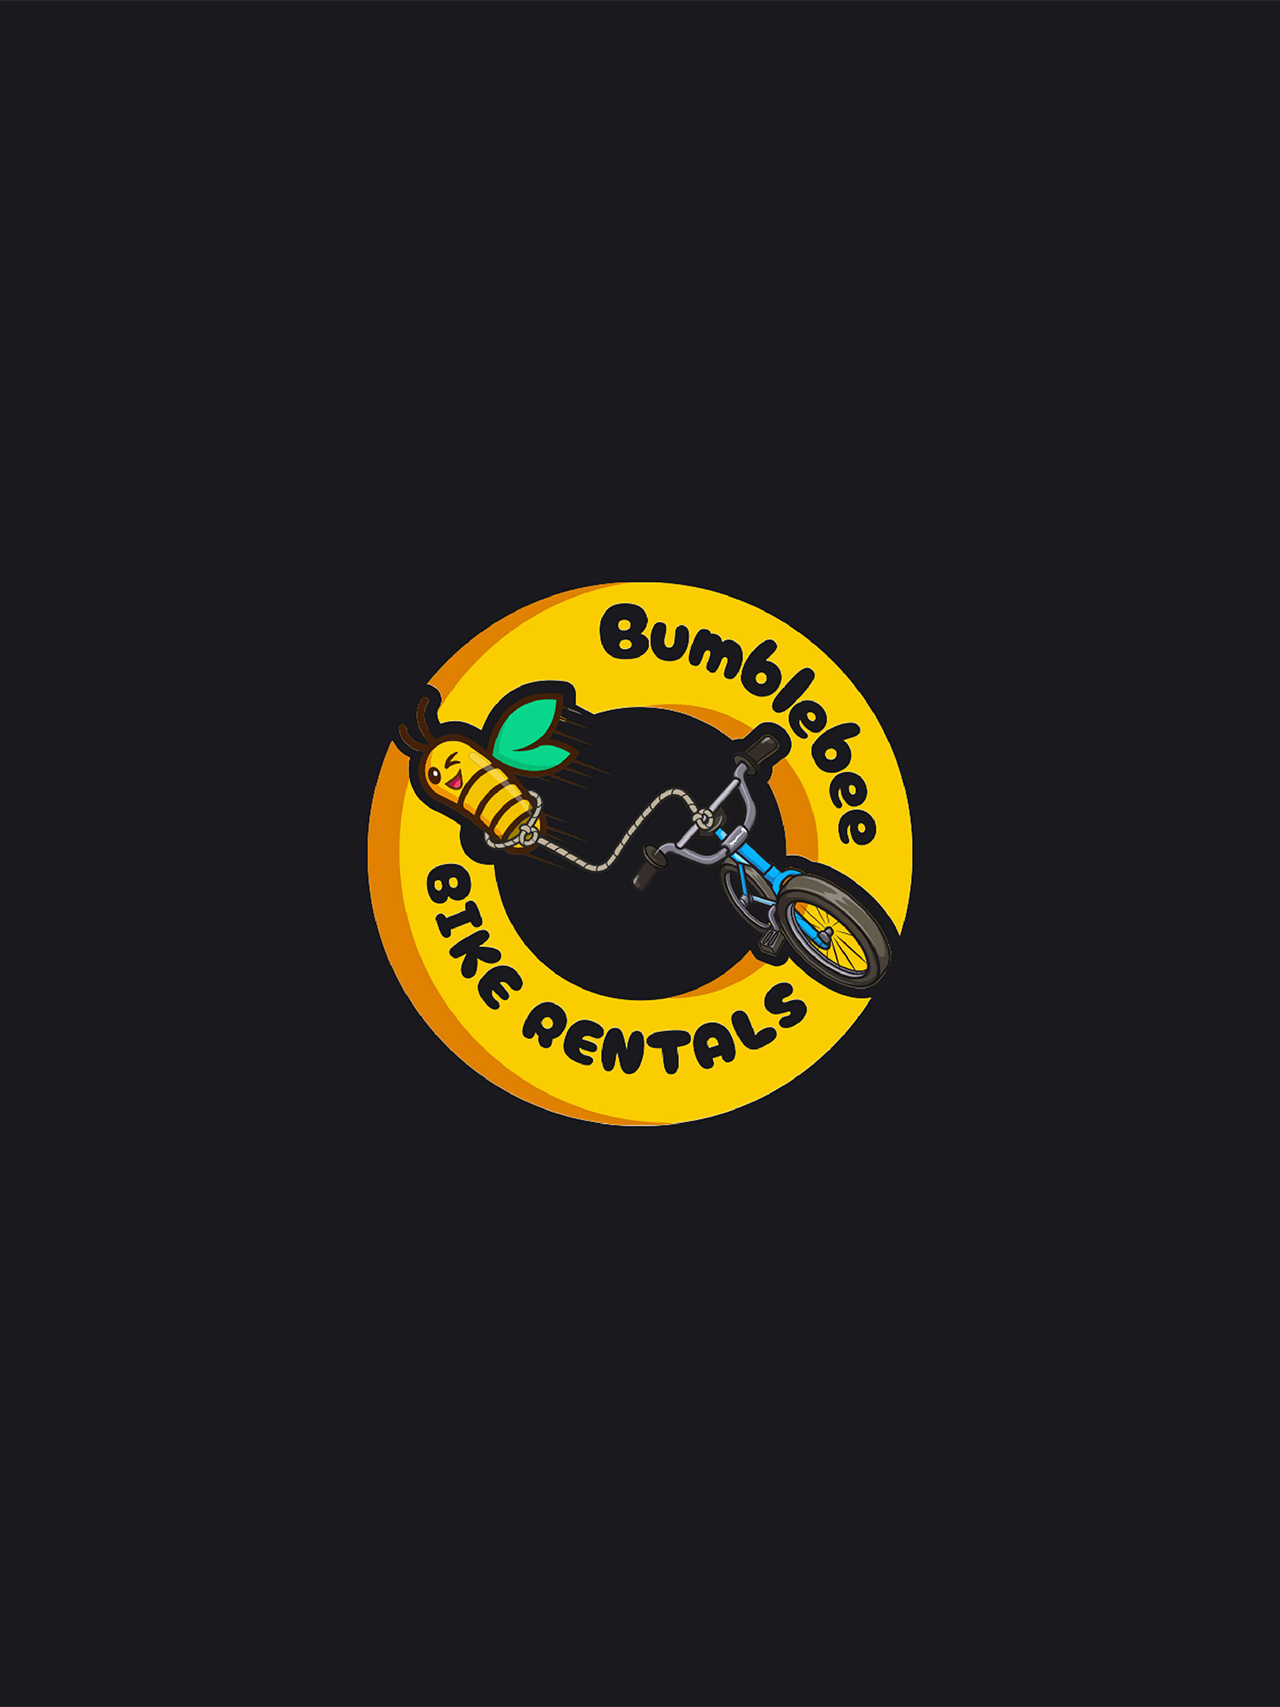 Bumblebee Bike Rentals Logo